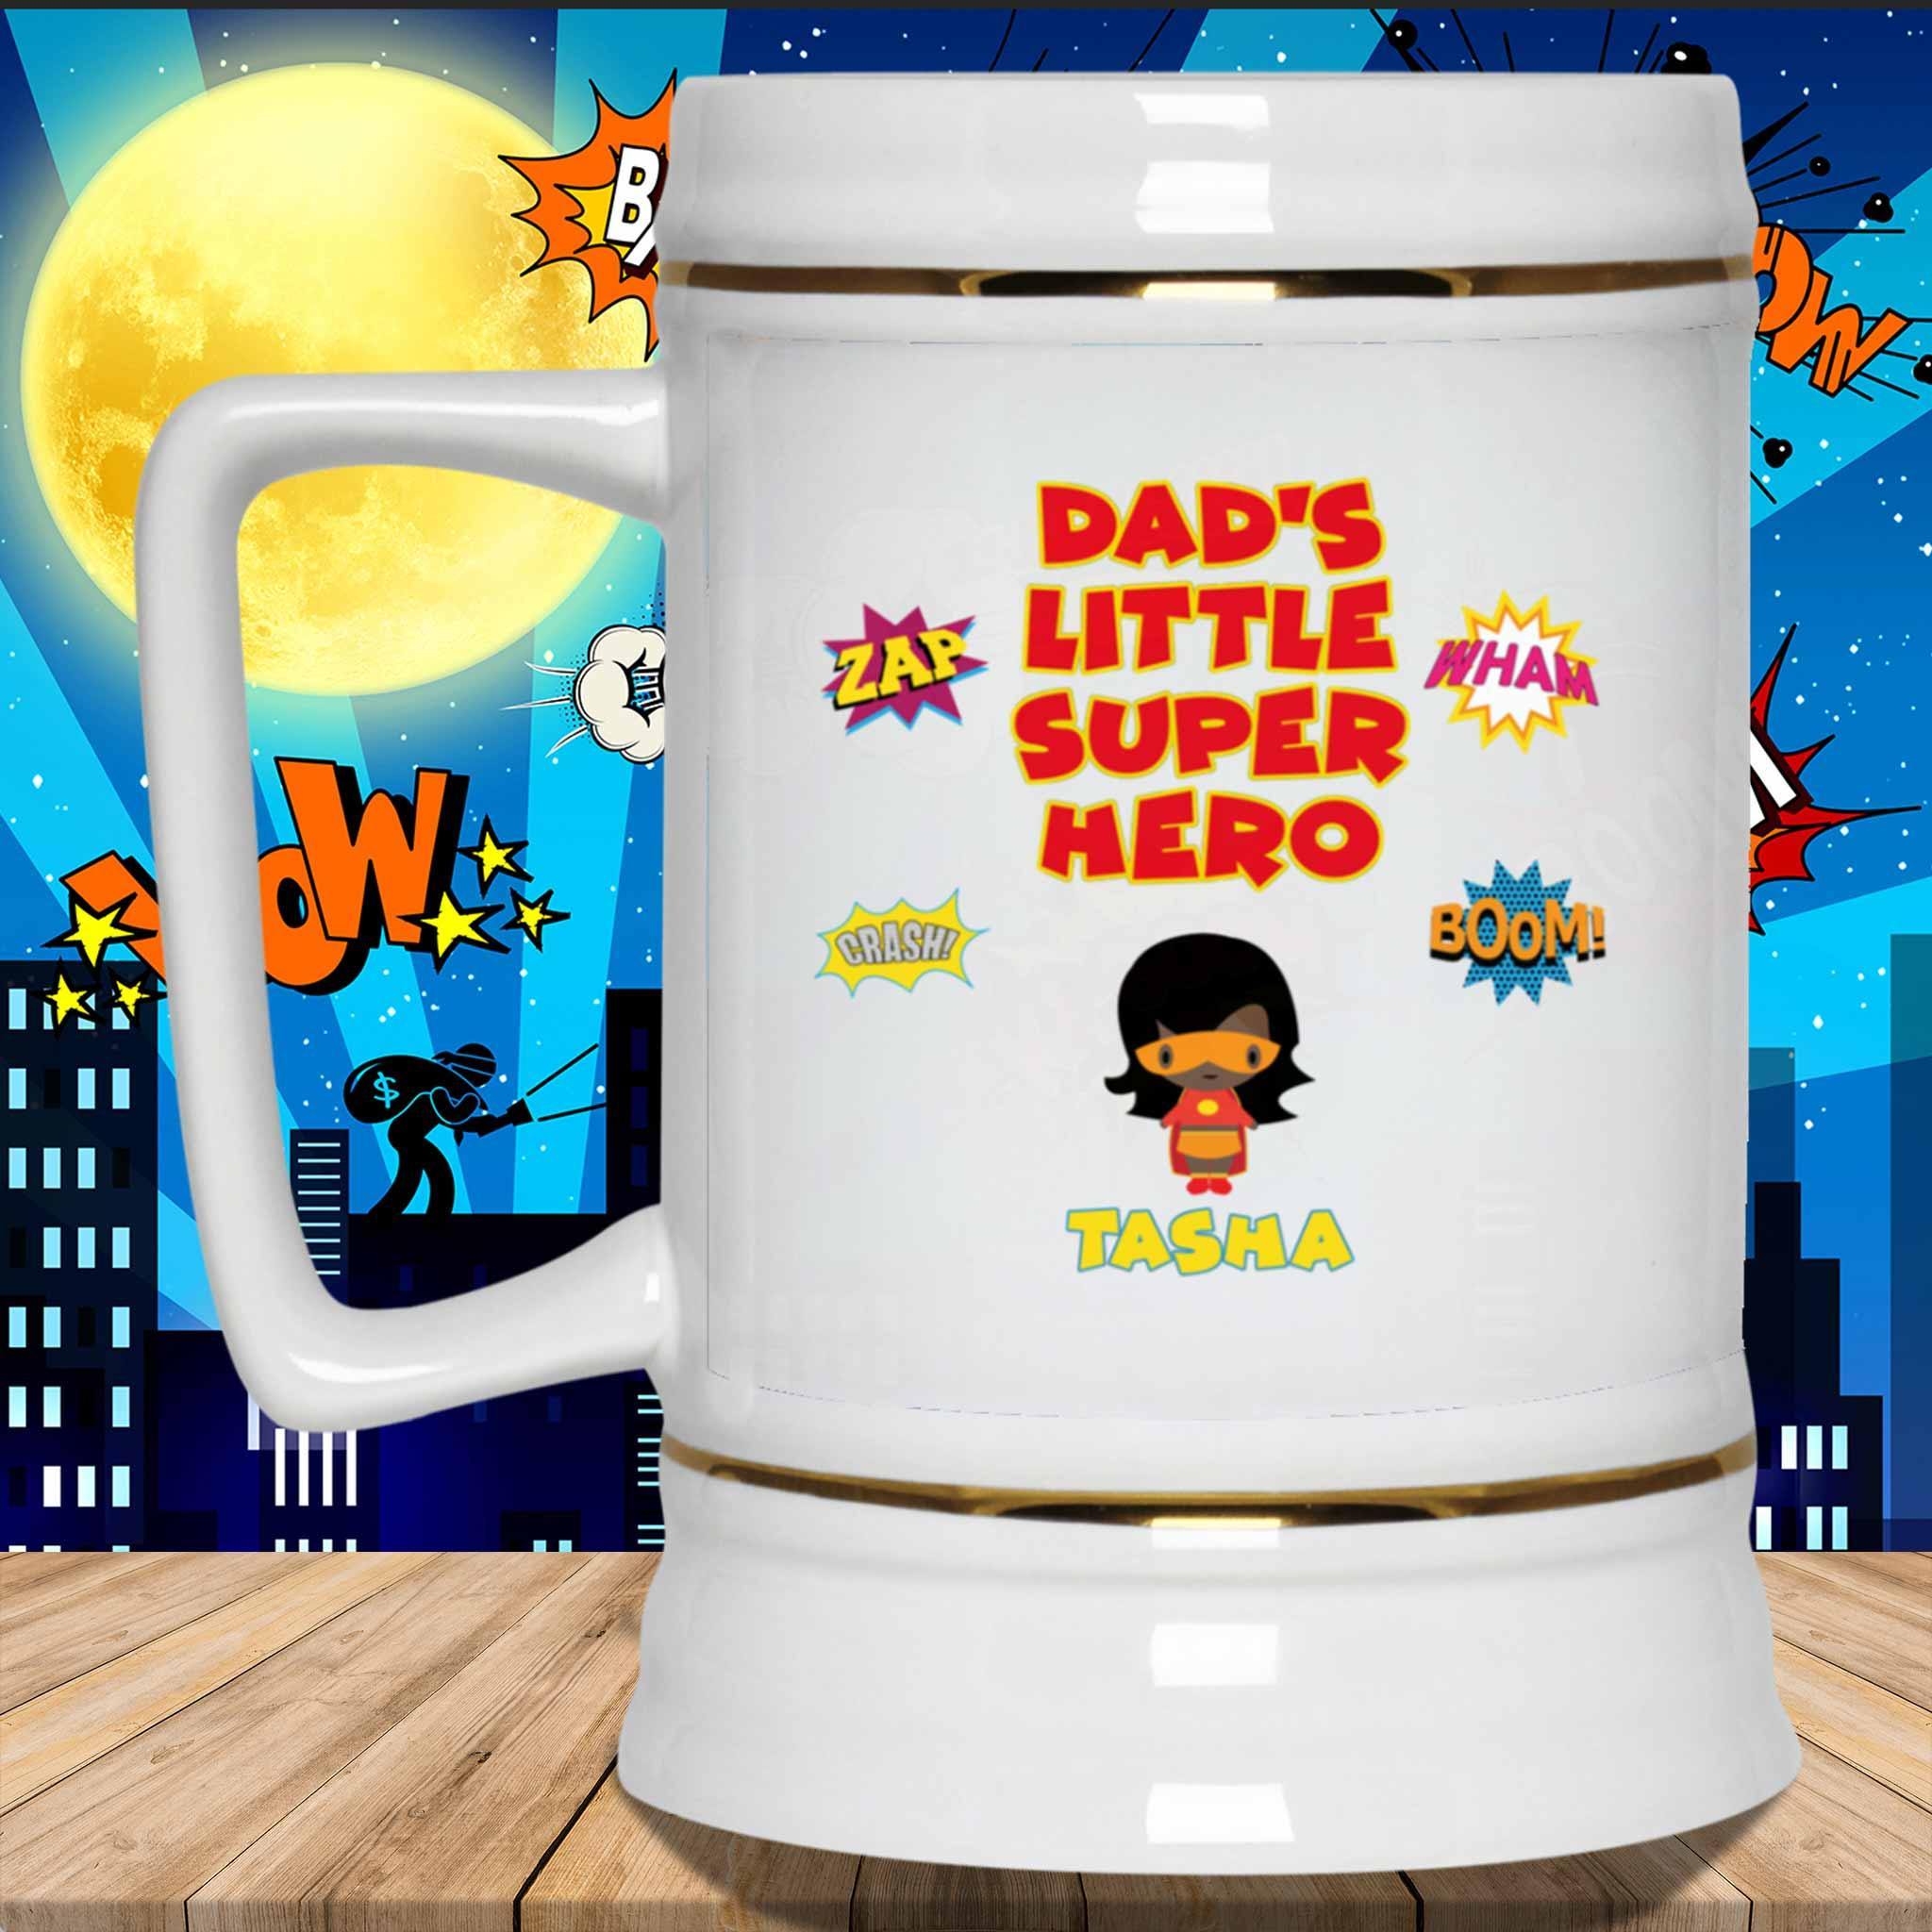 Dad's Little Super Heroes Custom Personalized 22oz Mug SteinCustomly Gifts